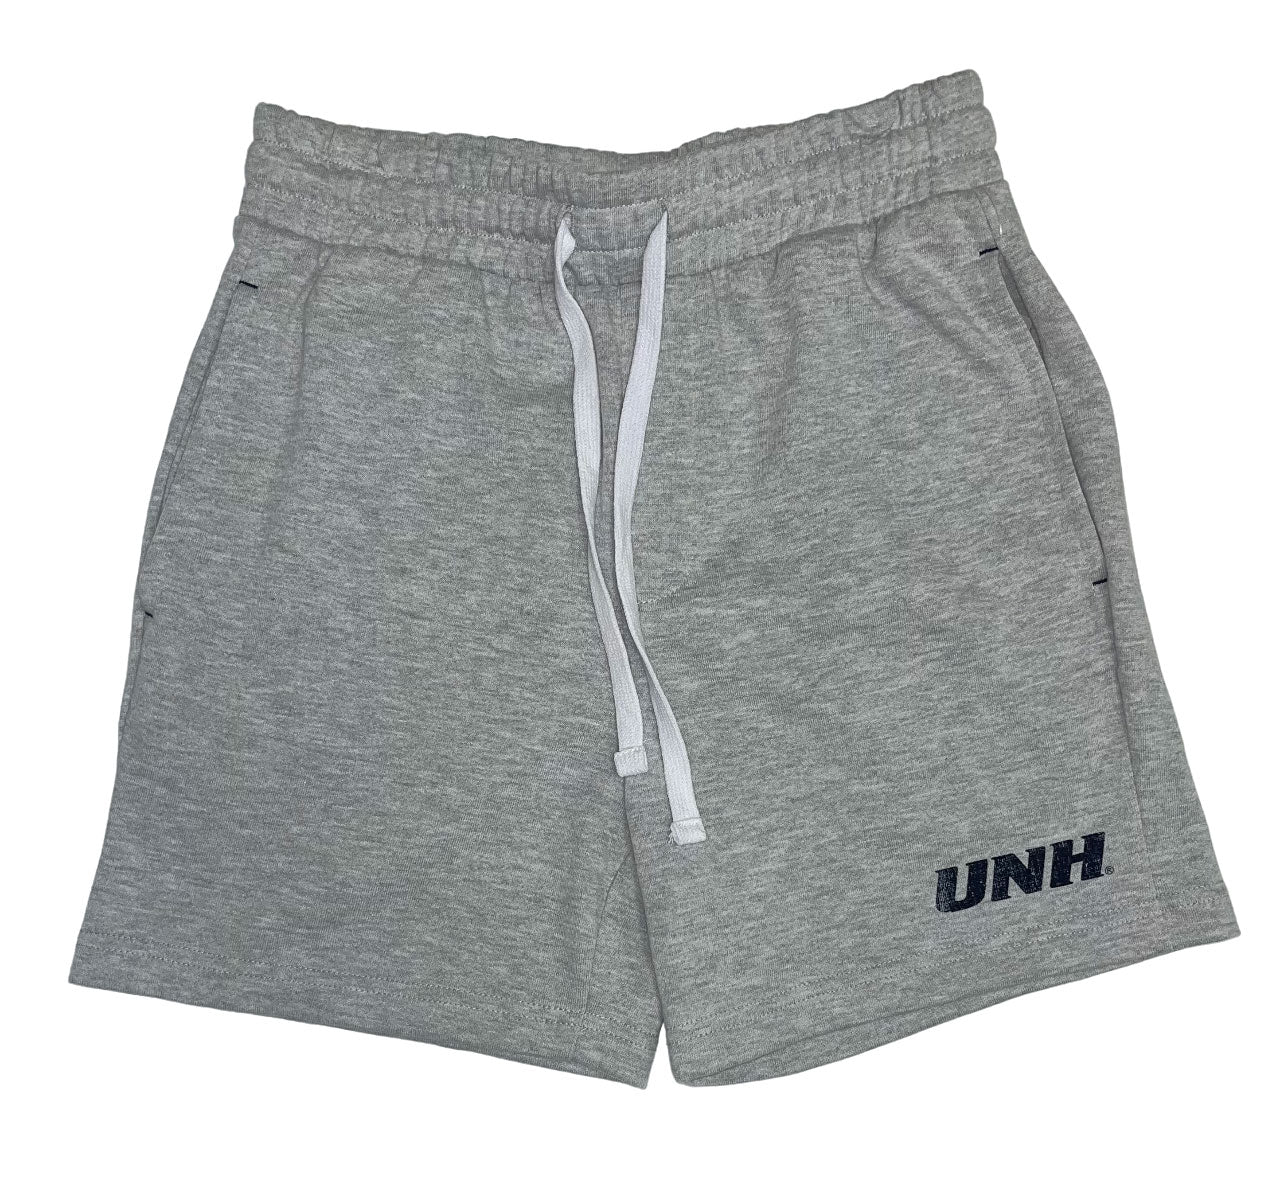 Men's UNH Bryde Shorts